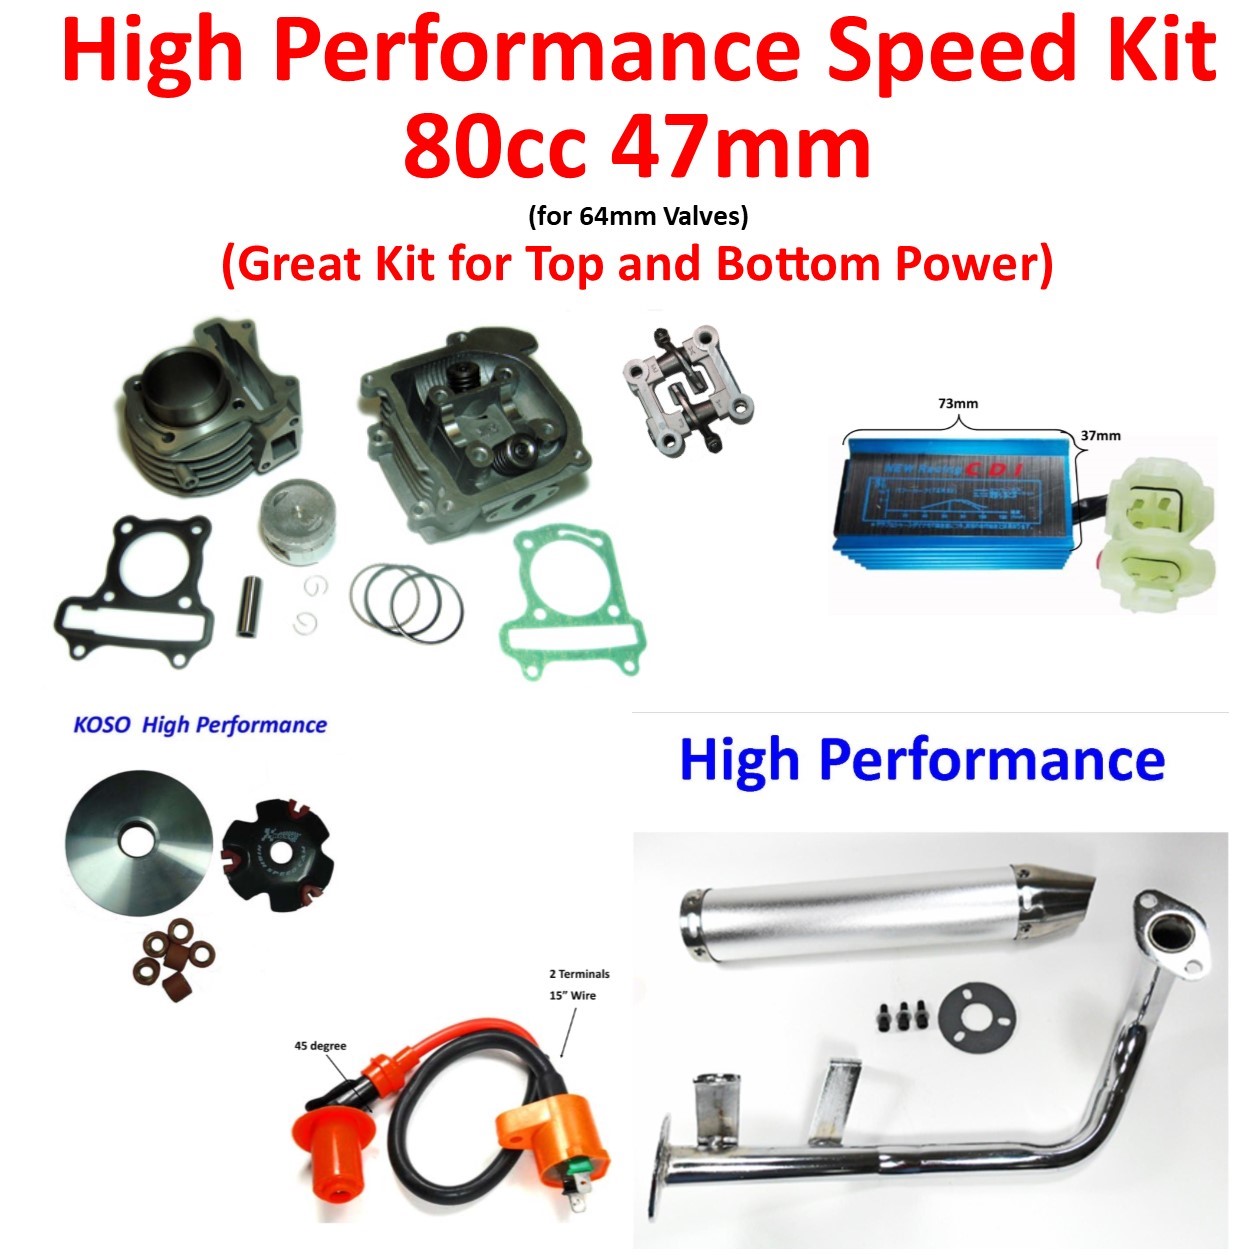 High Performance Speed Kit GY6-80cc (47mm)